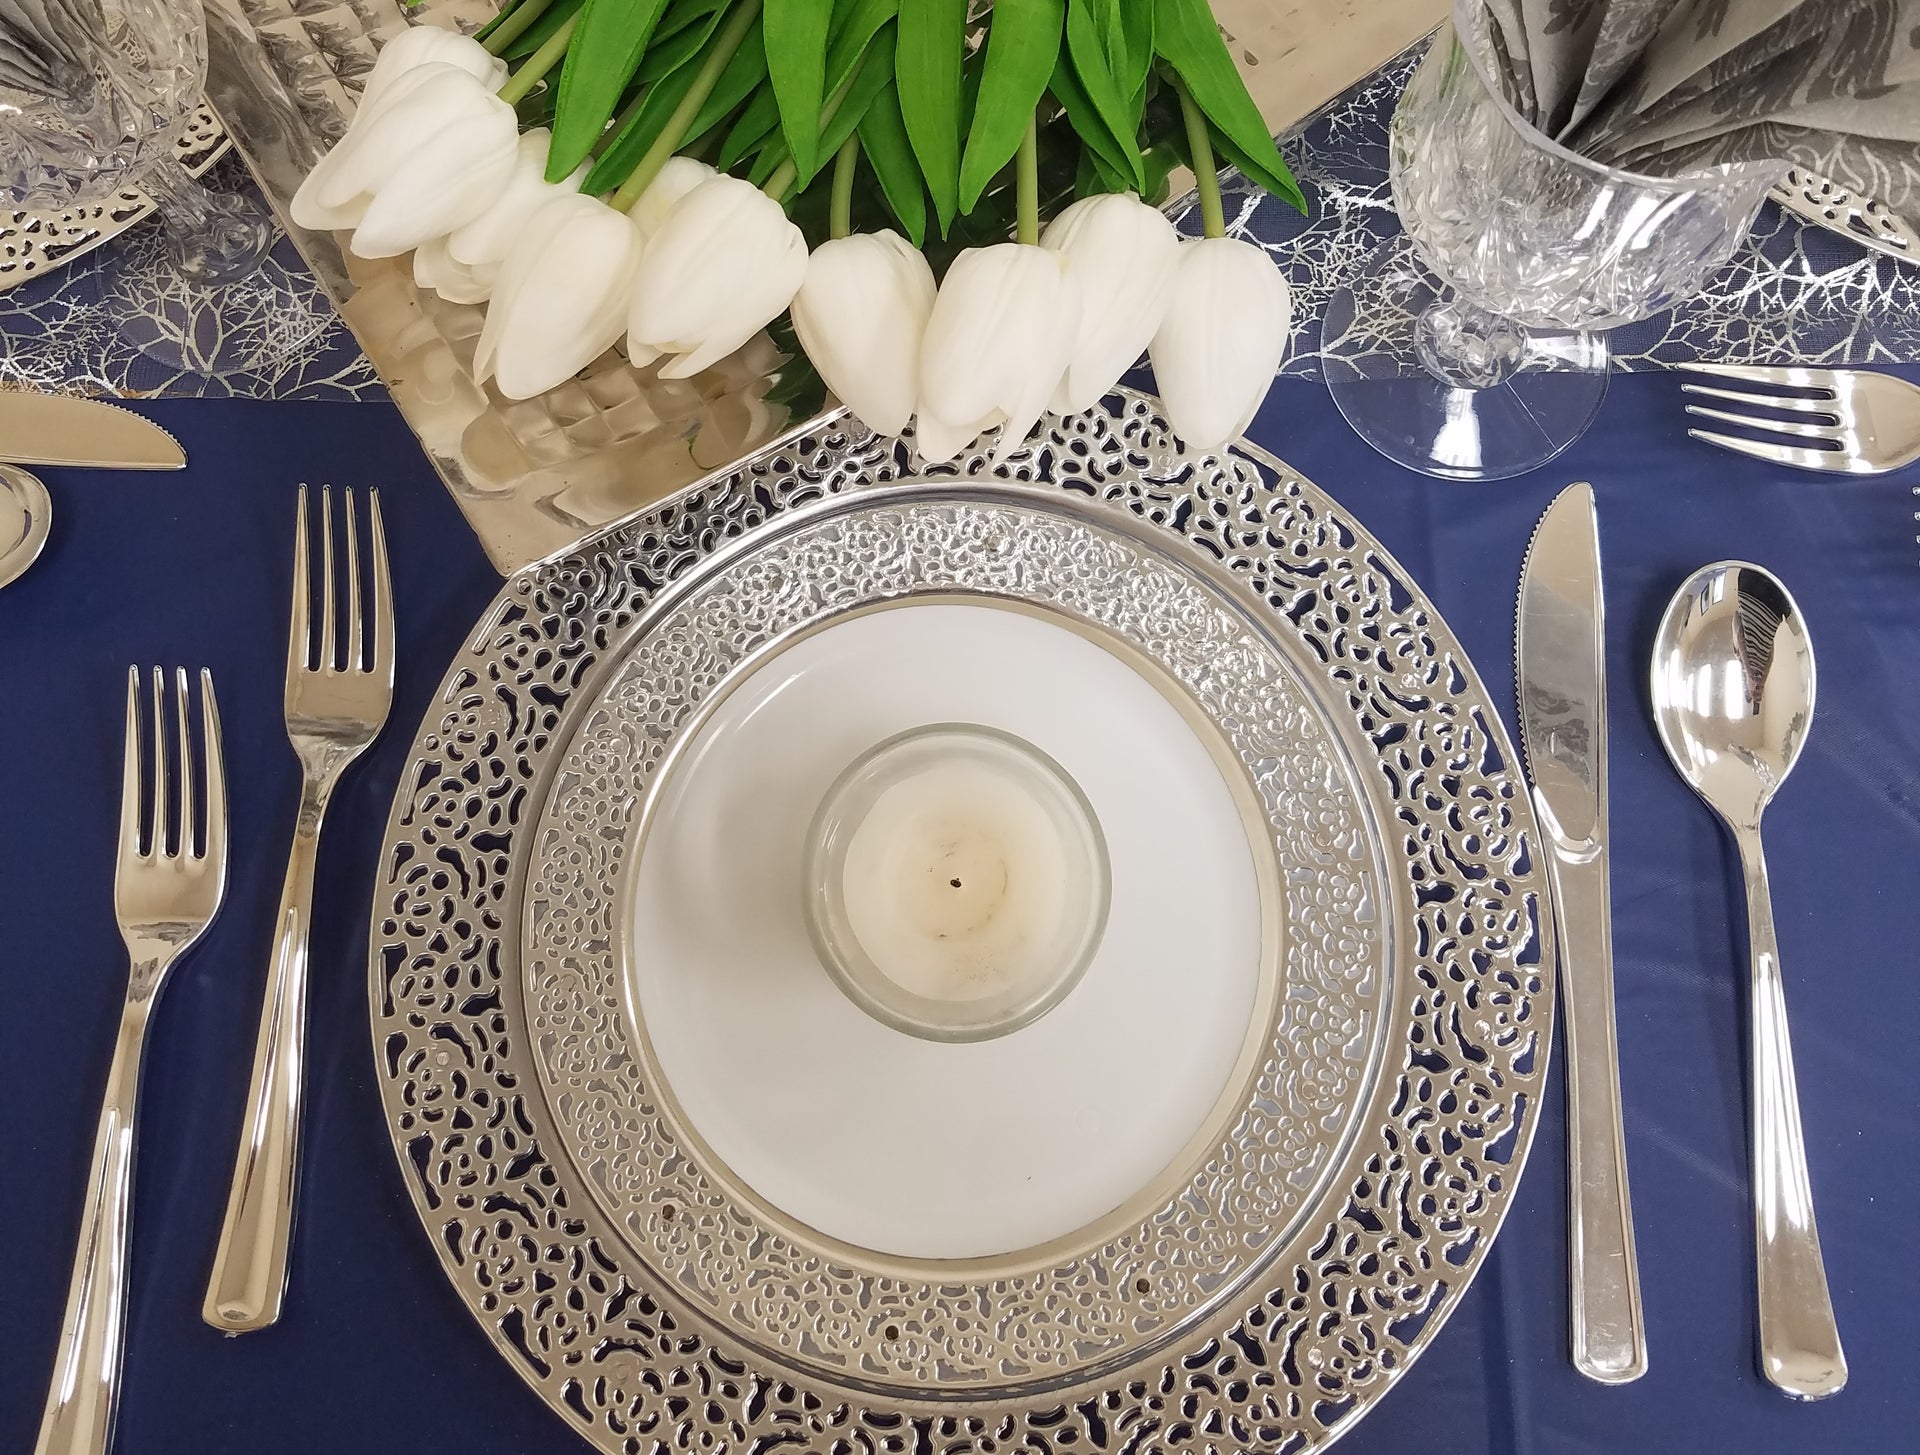 Springtime Sophistication: Creating an Elegant Table Setting